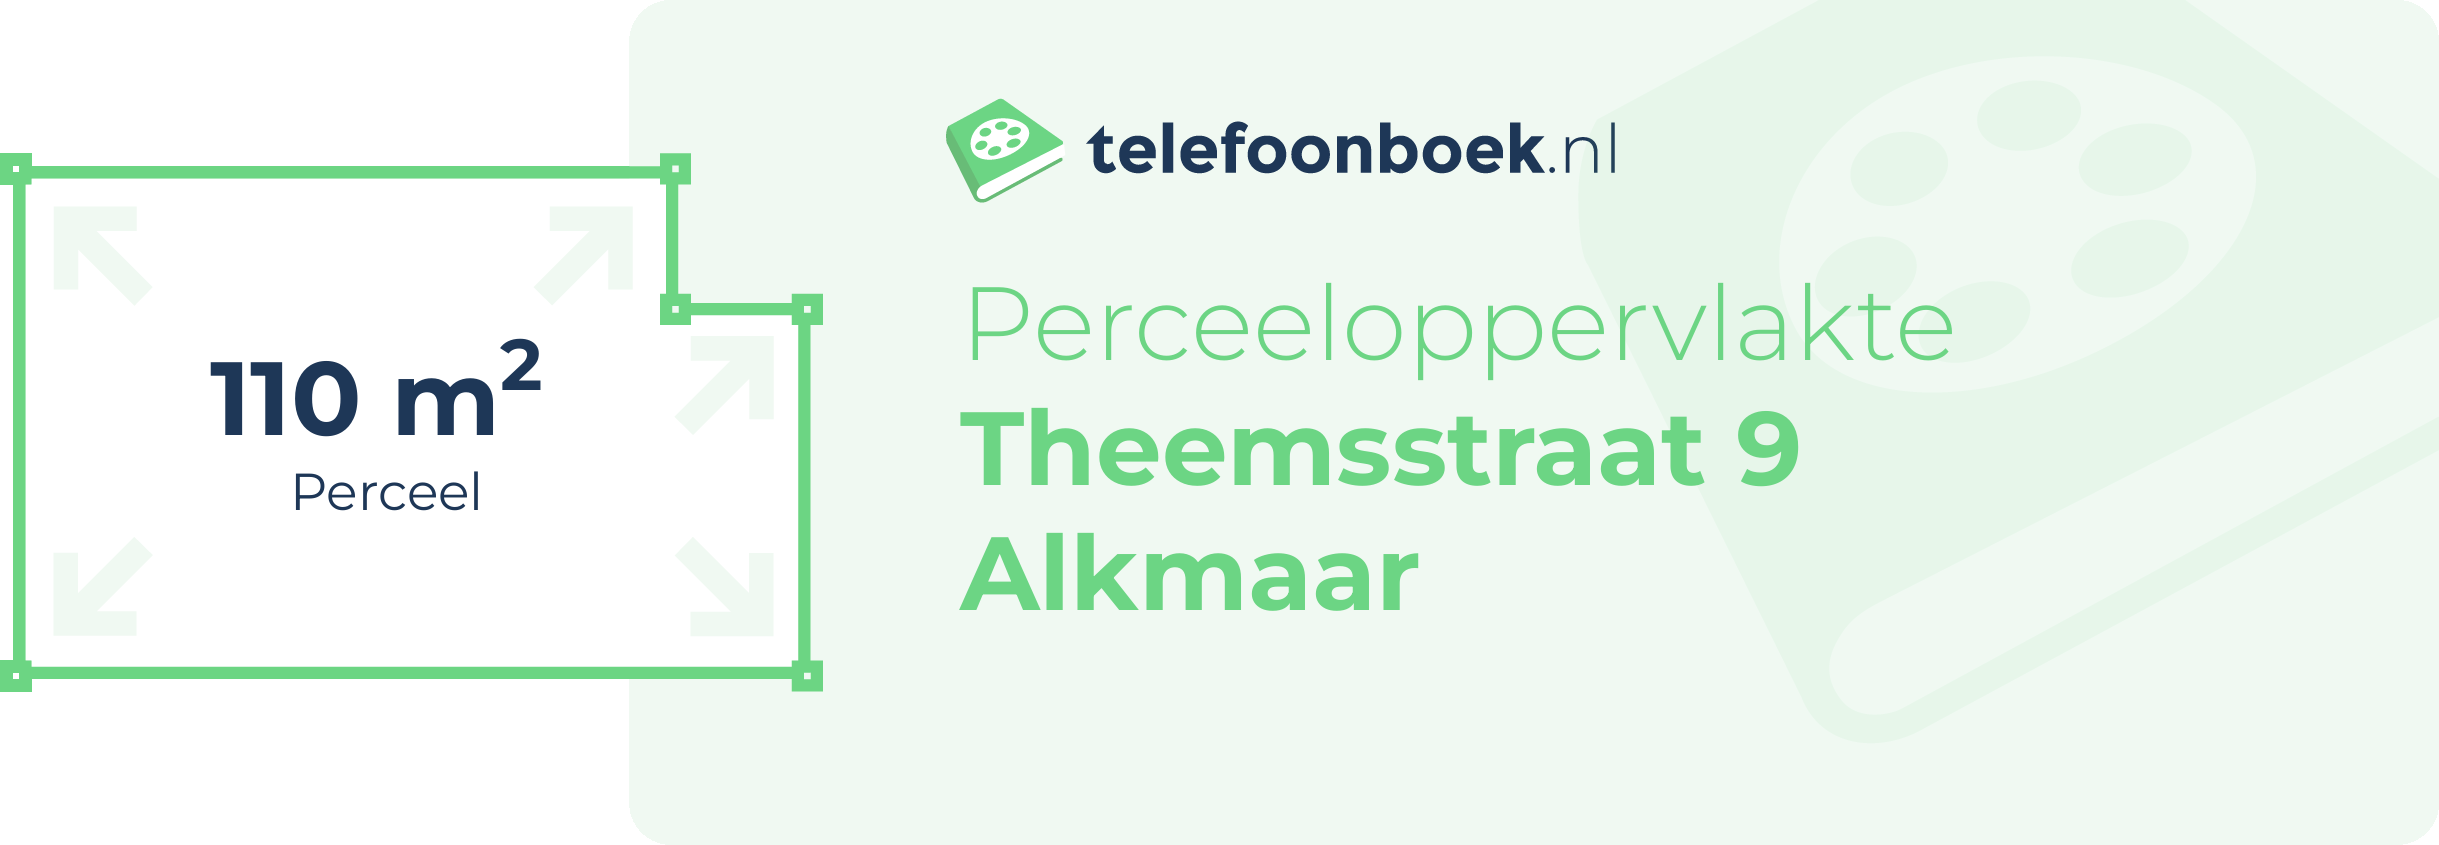 Perceeloppervlakte Theemsstraat 9 Alkmaar